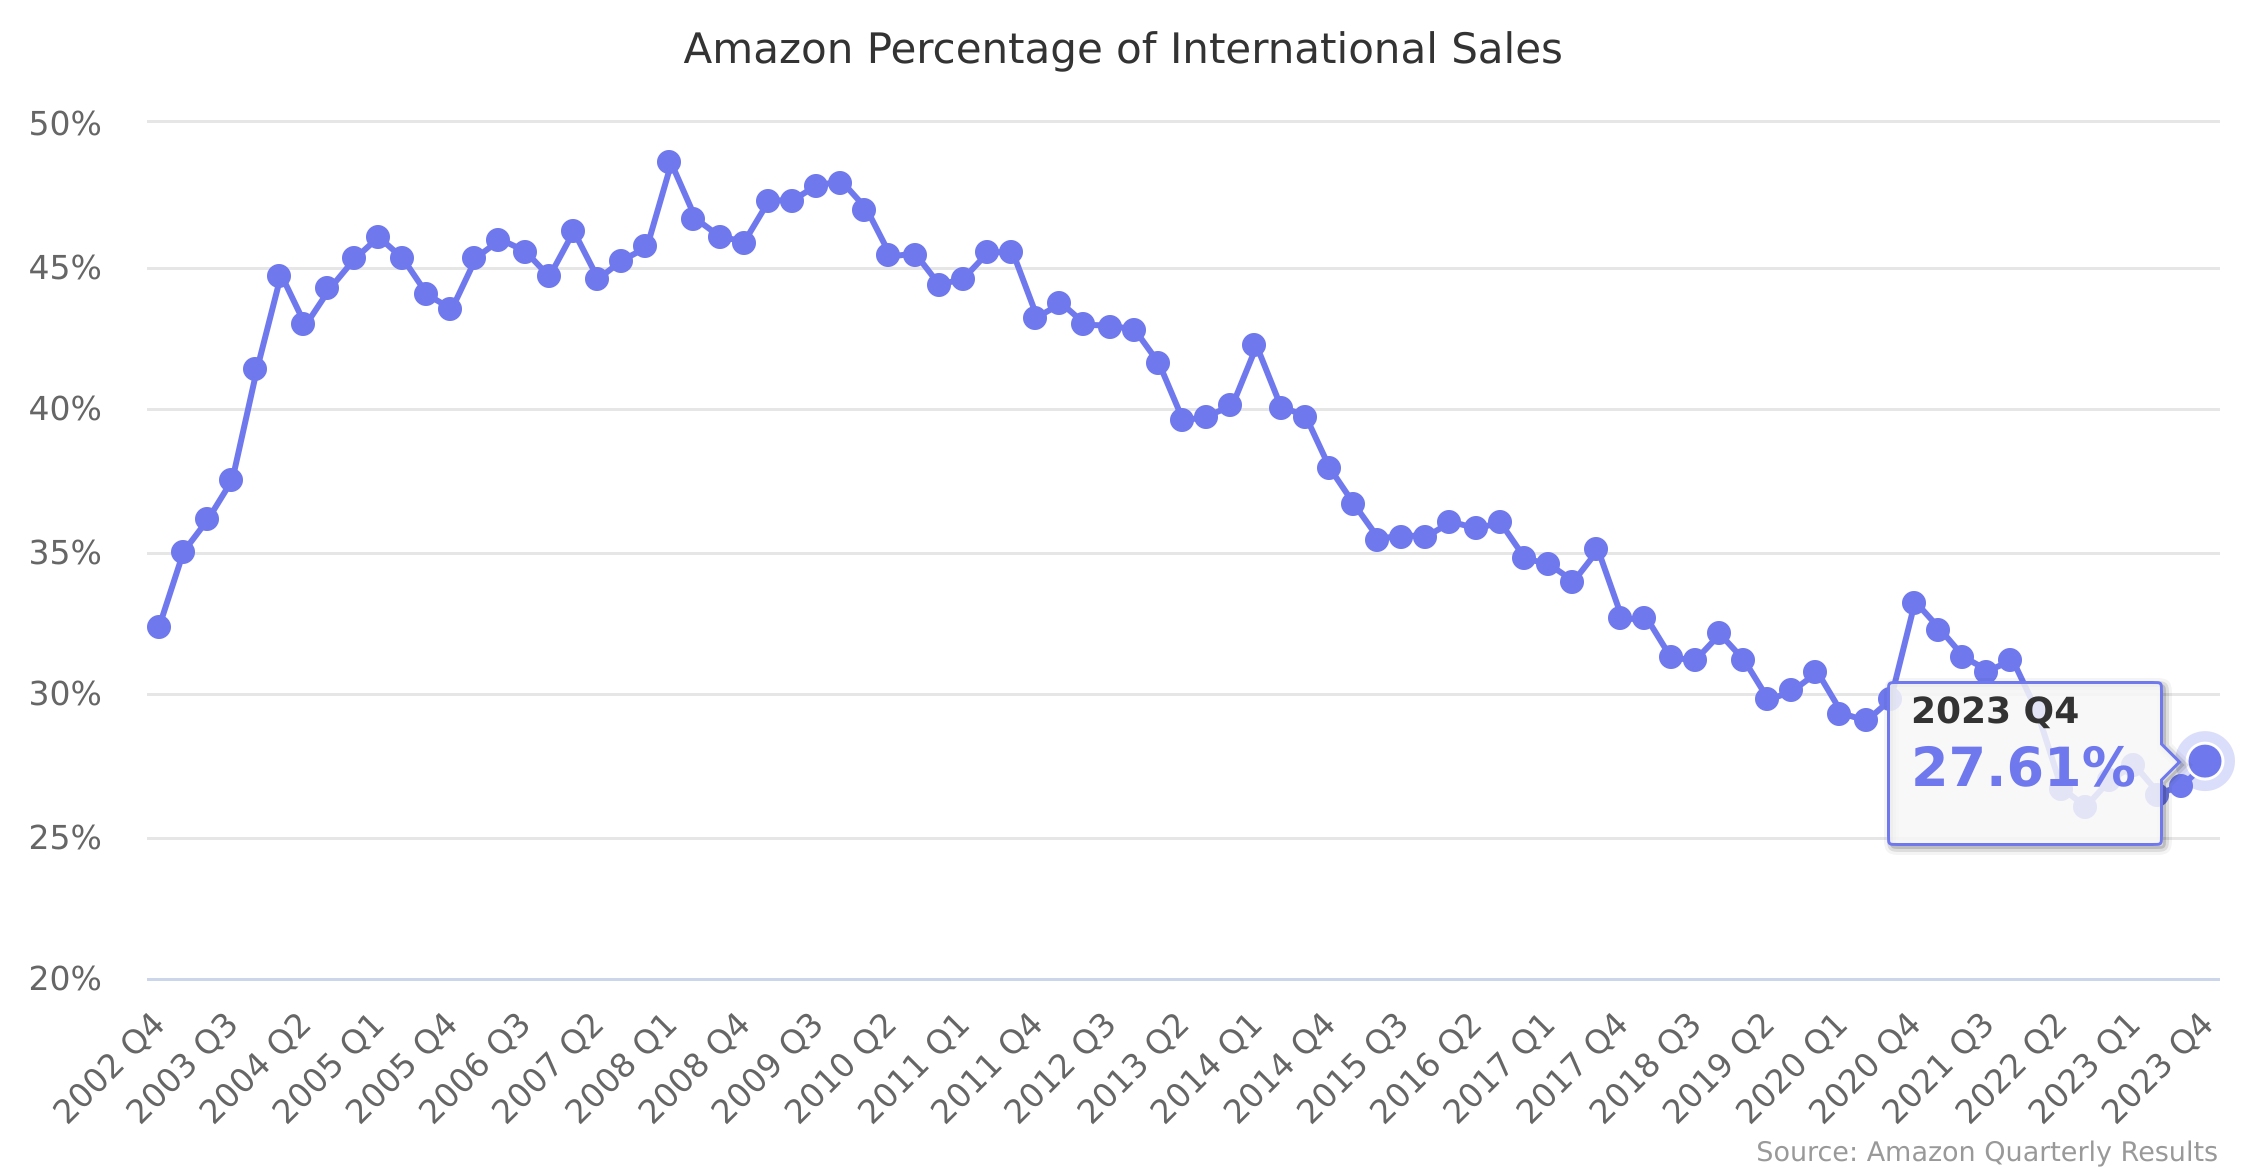 Amazon Percentage of International Sales 2002-2023